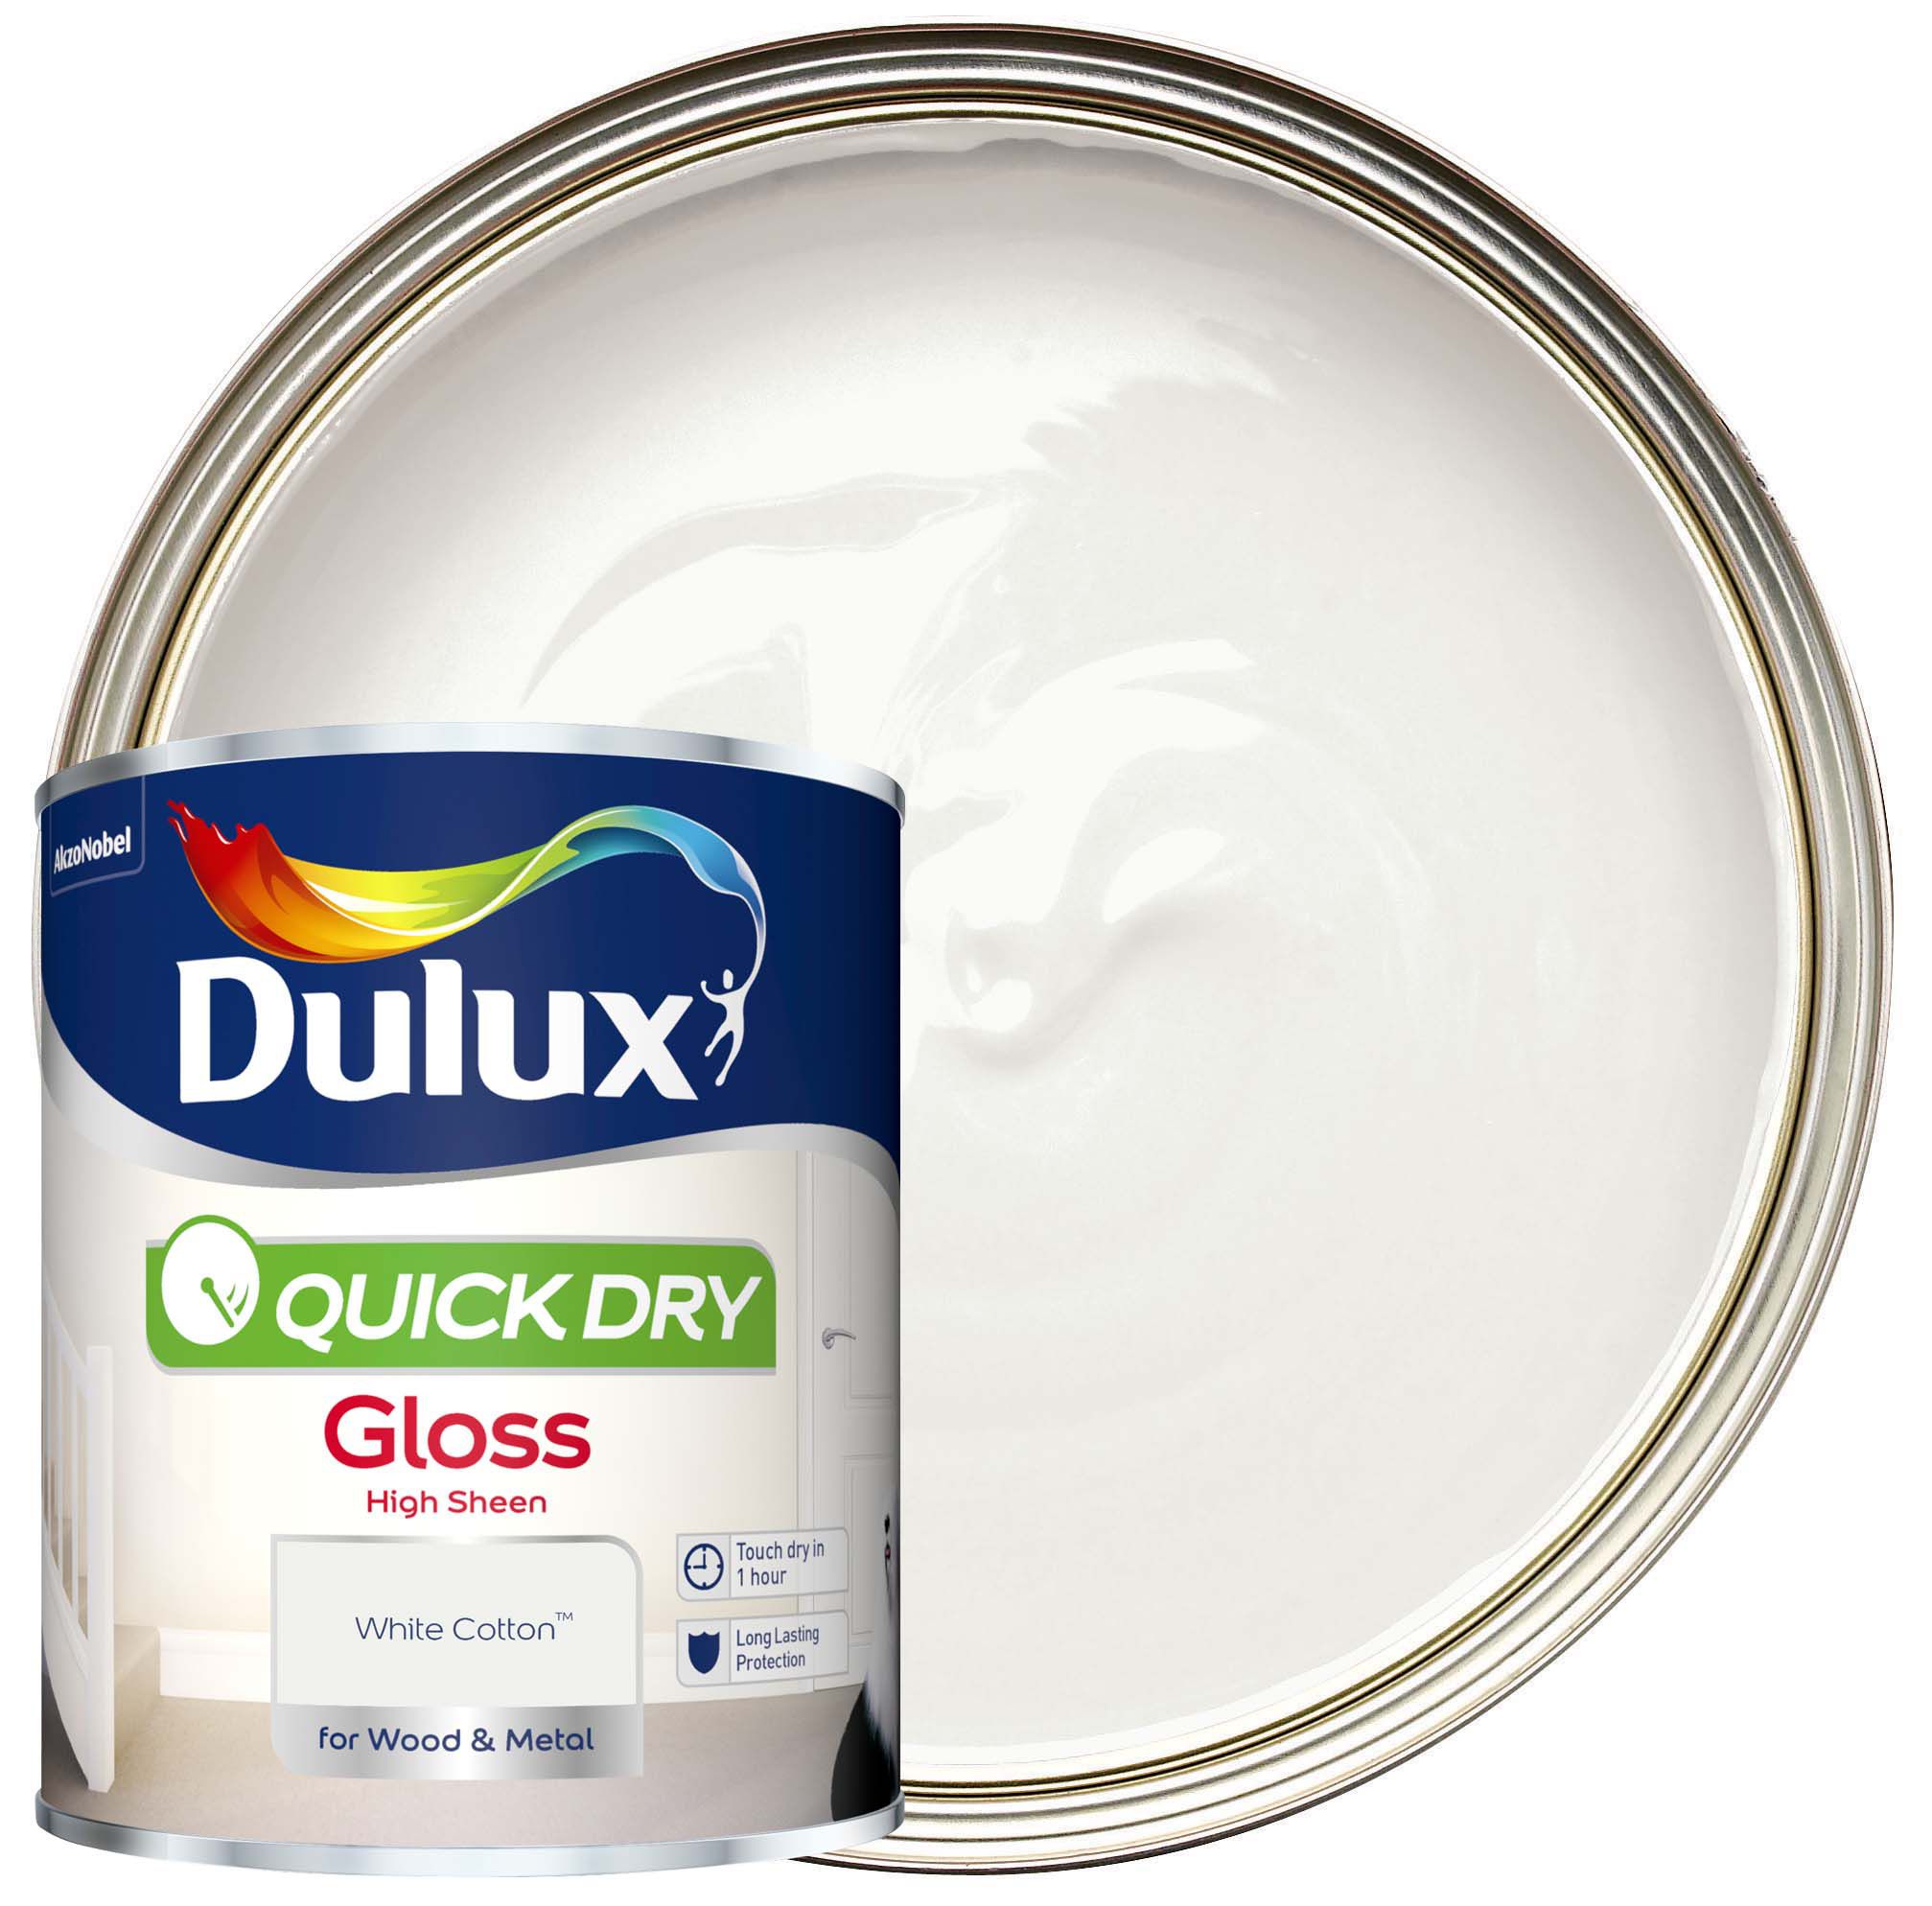 Image of Dulux Quick Dry Gloss Paint - White Cotton Paint - 750ml